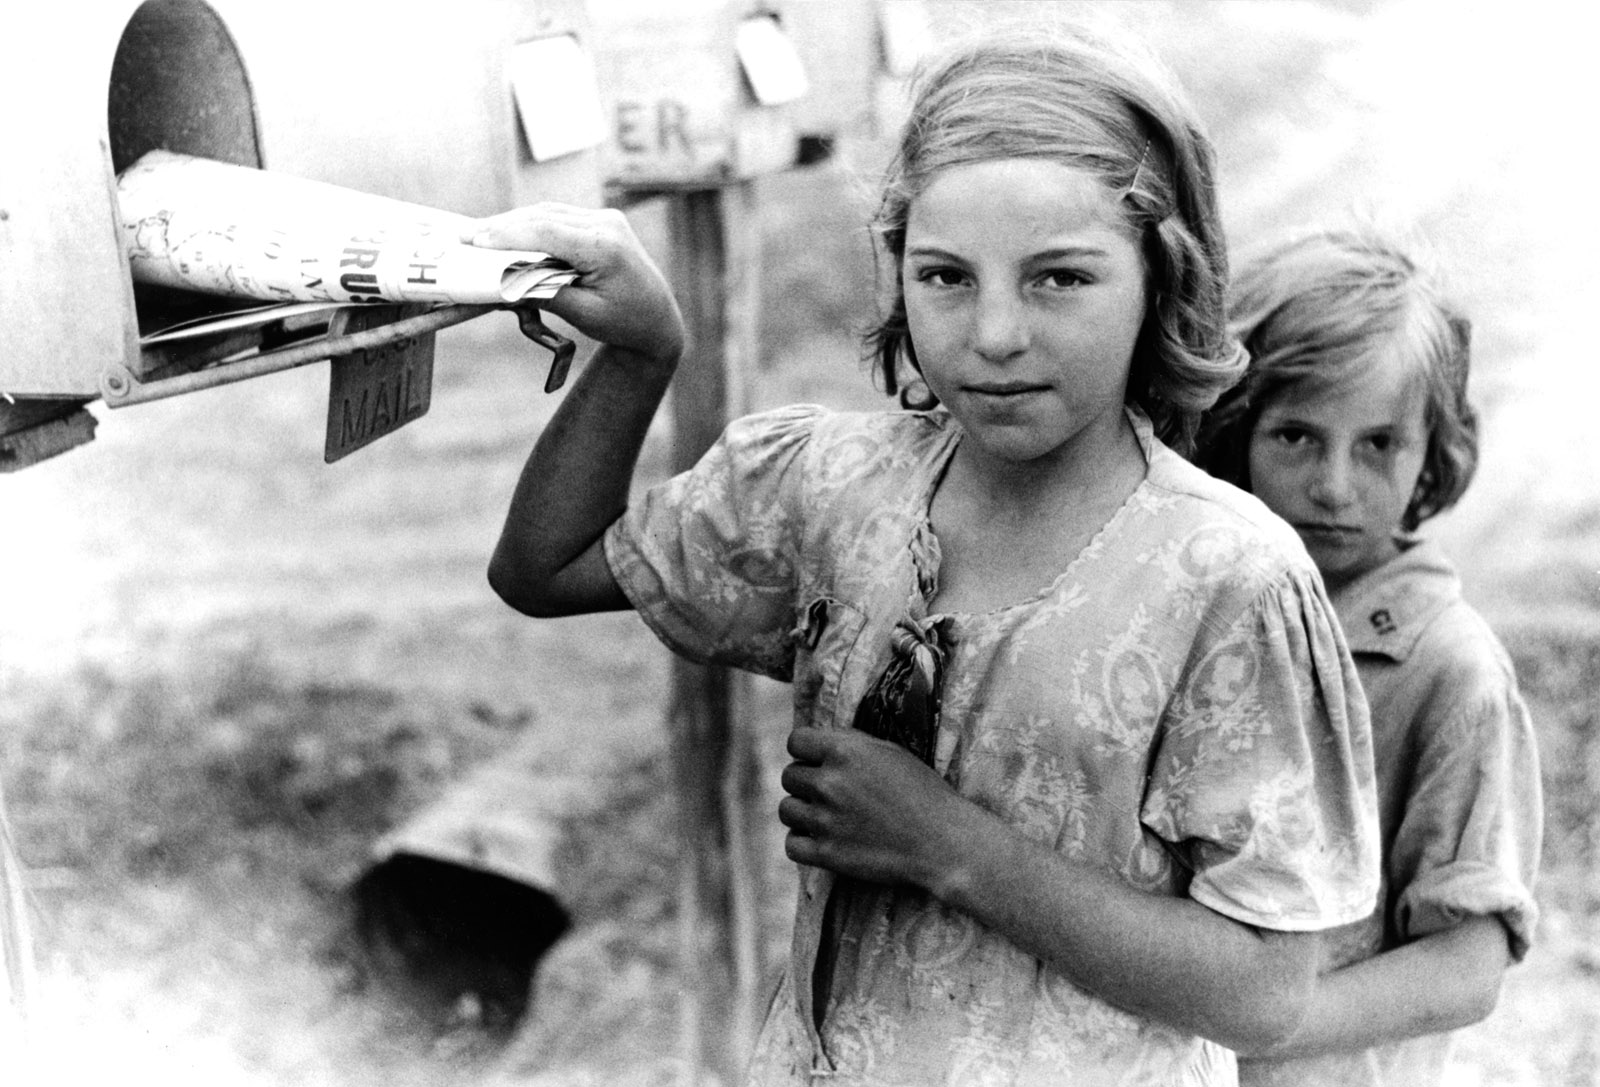 Ozark children getting mail from RFD box, Missouri, May, 1940